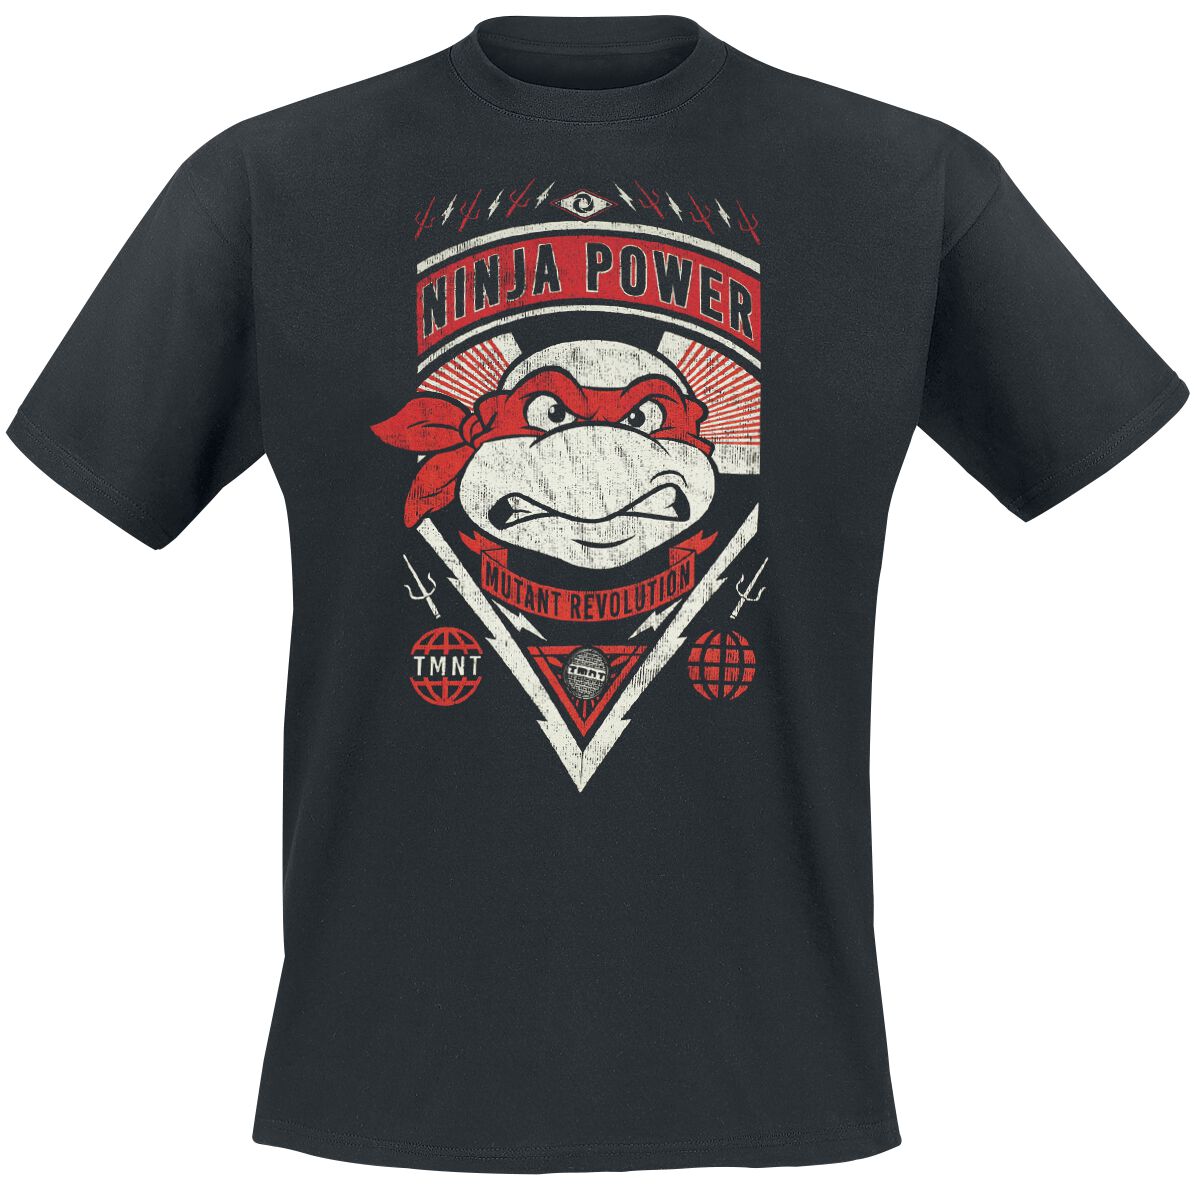 Teenage Mutant Ninja Turtles Raphael - Ninja Power T-Shirt schwarz in M